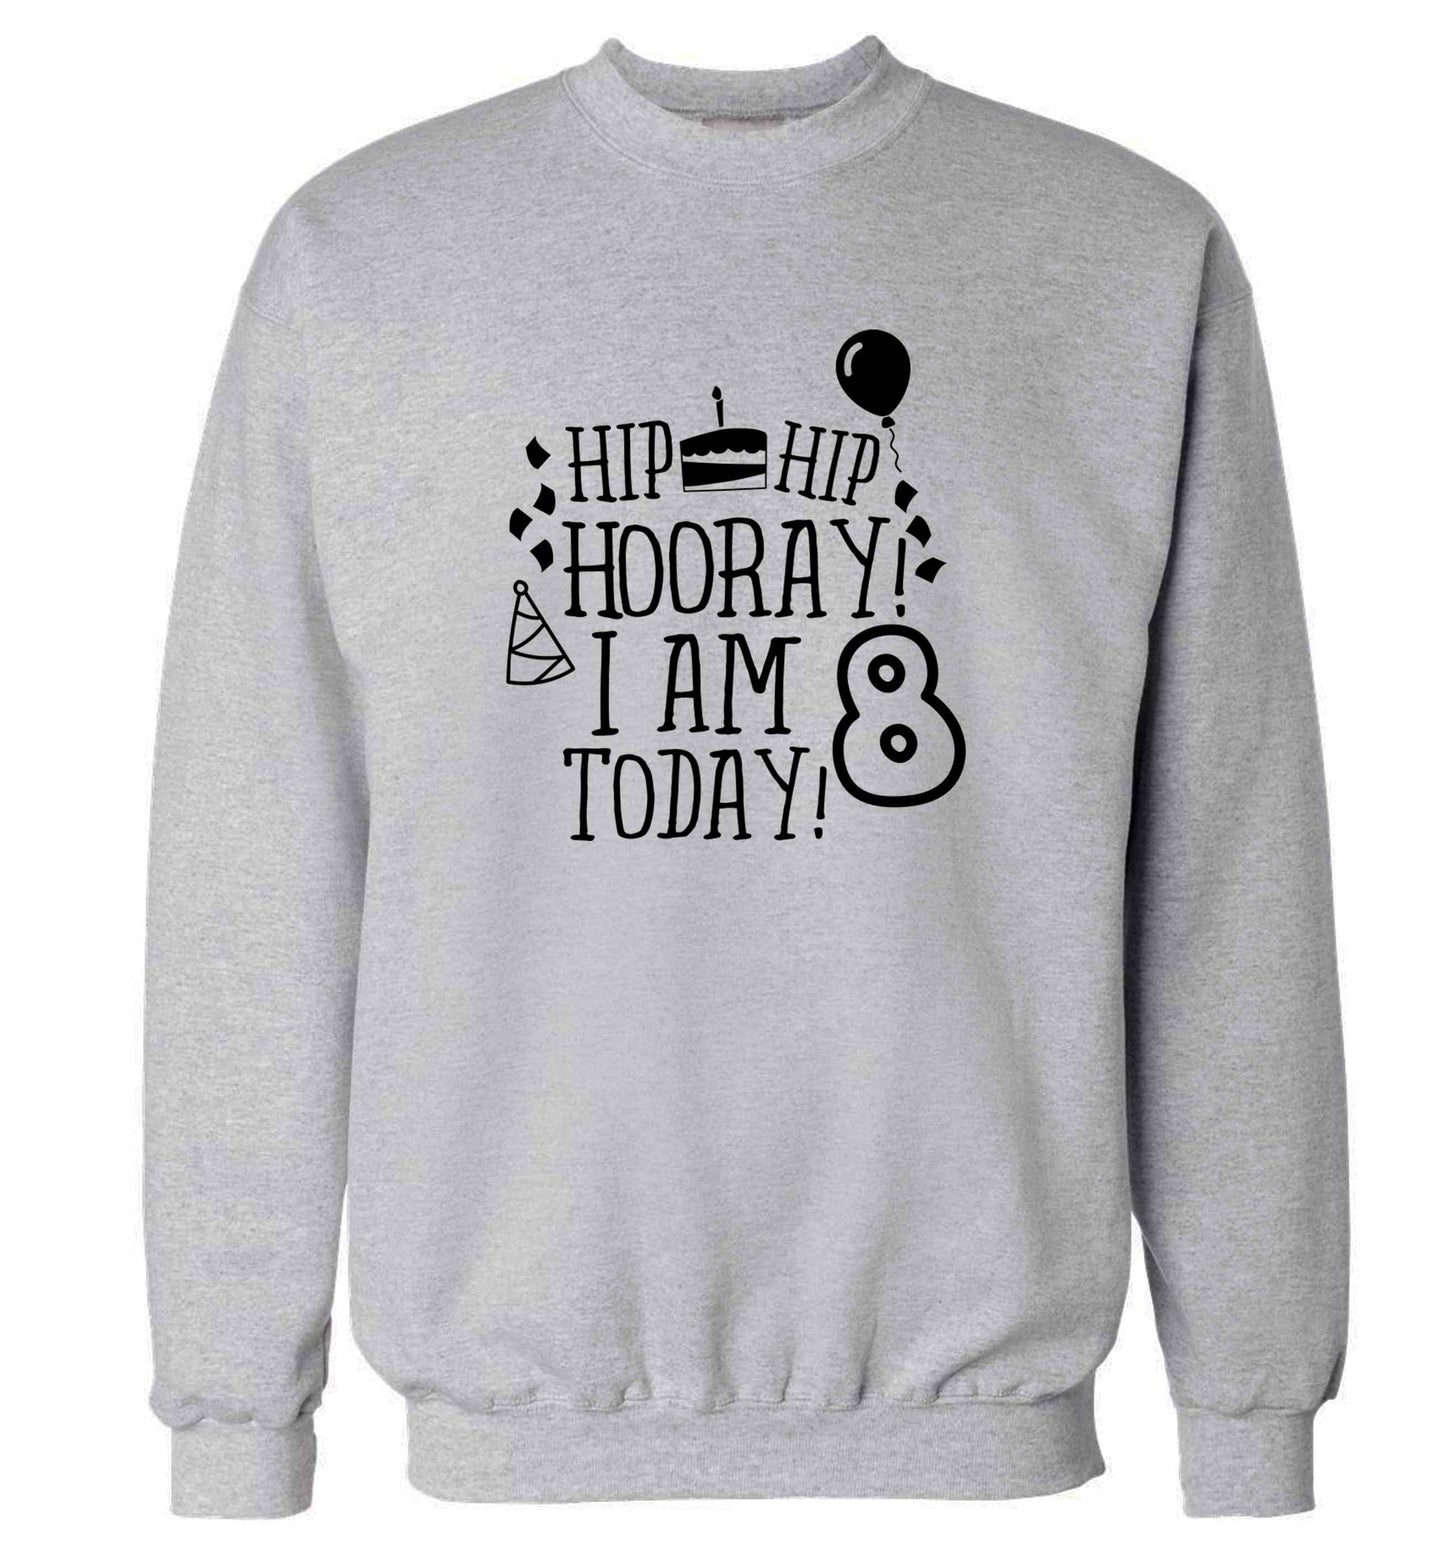 Hip hip hooray I am 8 today! adult's unisex grey sweater 2XL